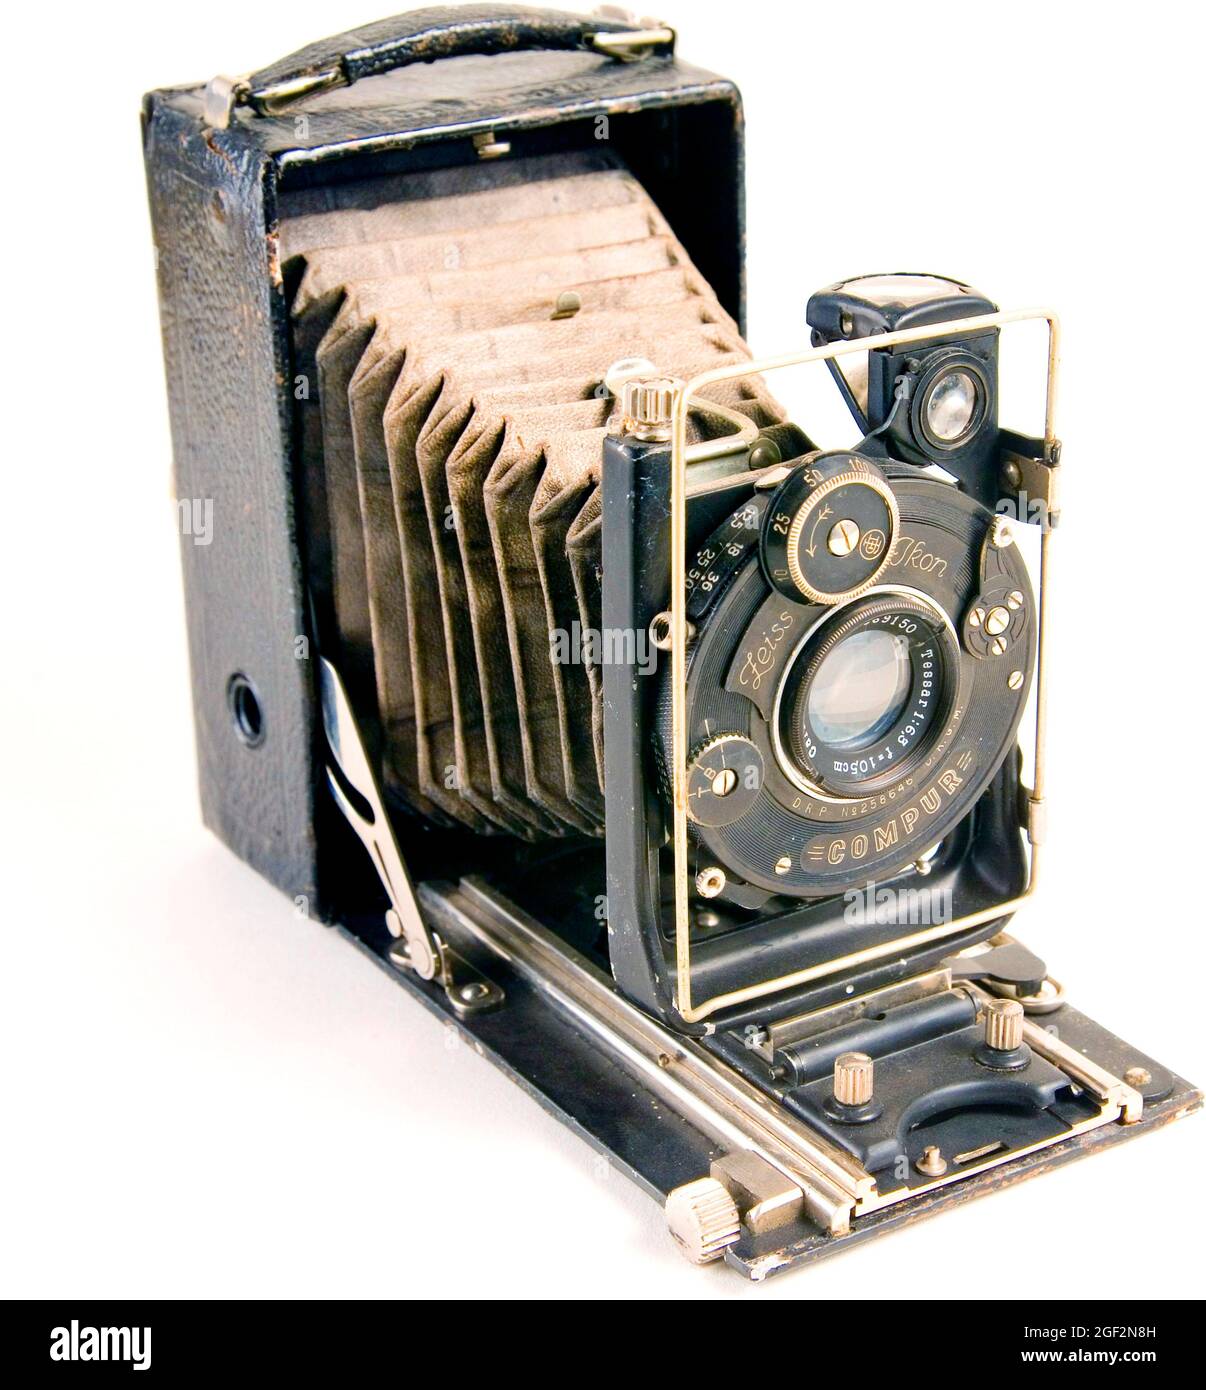 Vecchia macchina fotografica, Zeiss Ikon Compur Foto Stock